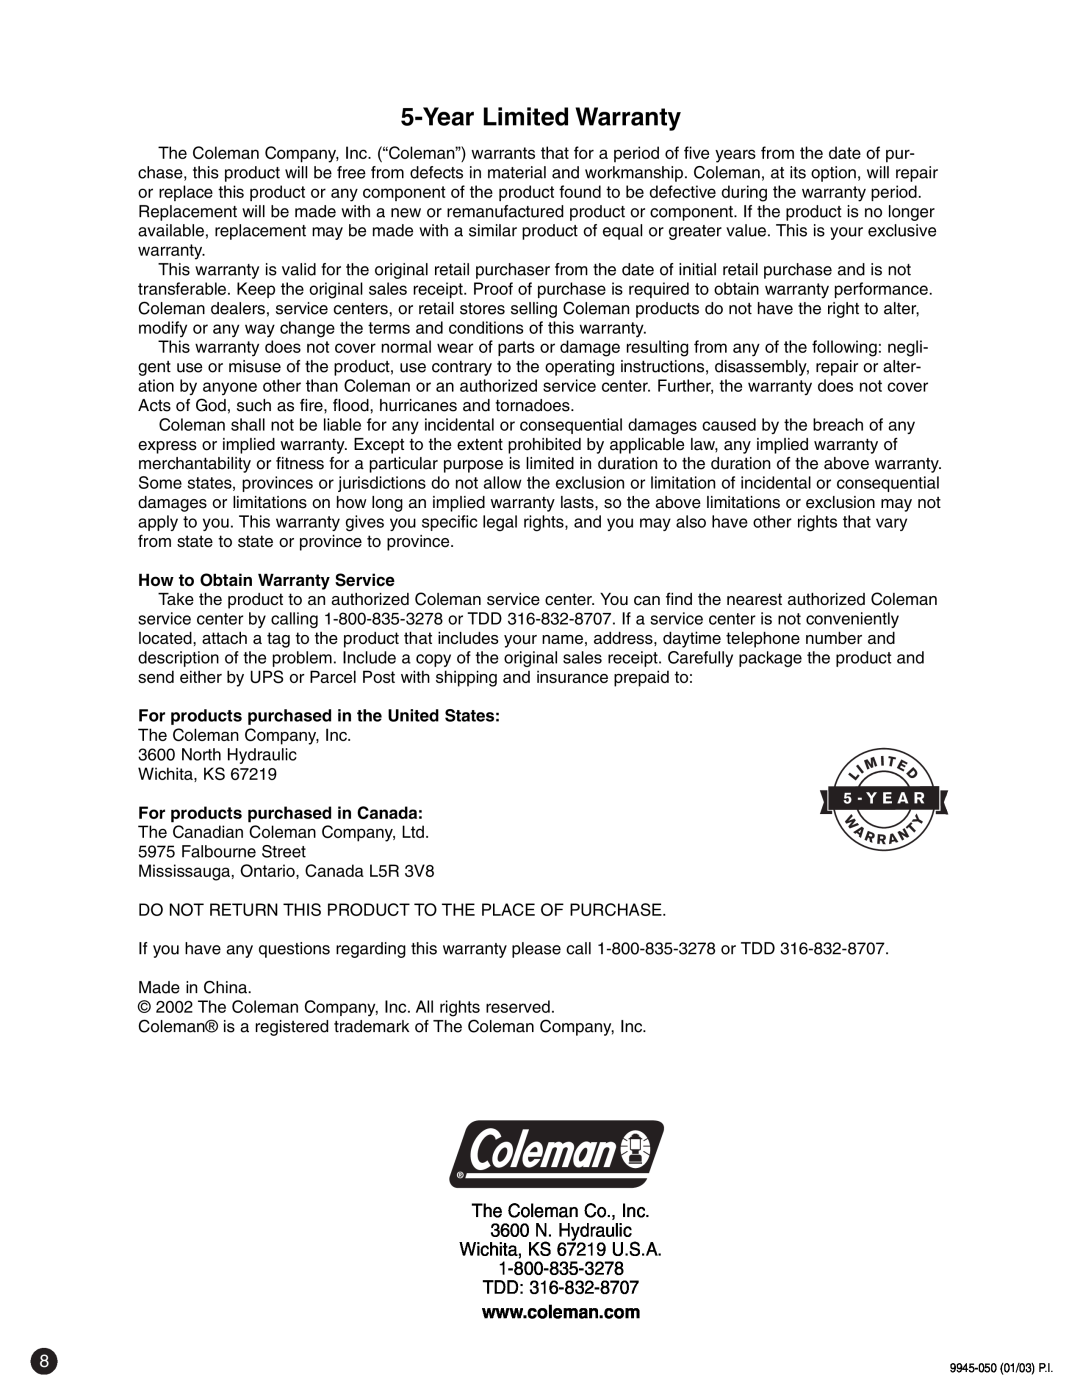 Coleman p9945-700 instruction manual Year Limited Warranty, The Coleman Co., Inc 3600 N. Hydraulic Wichita, KS 67219 U.S.A 